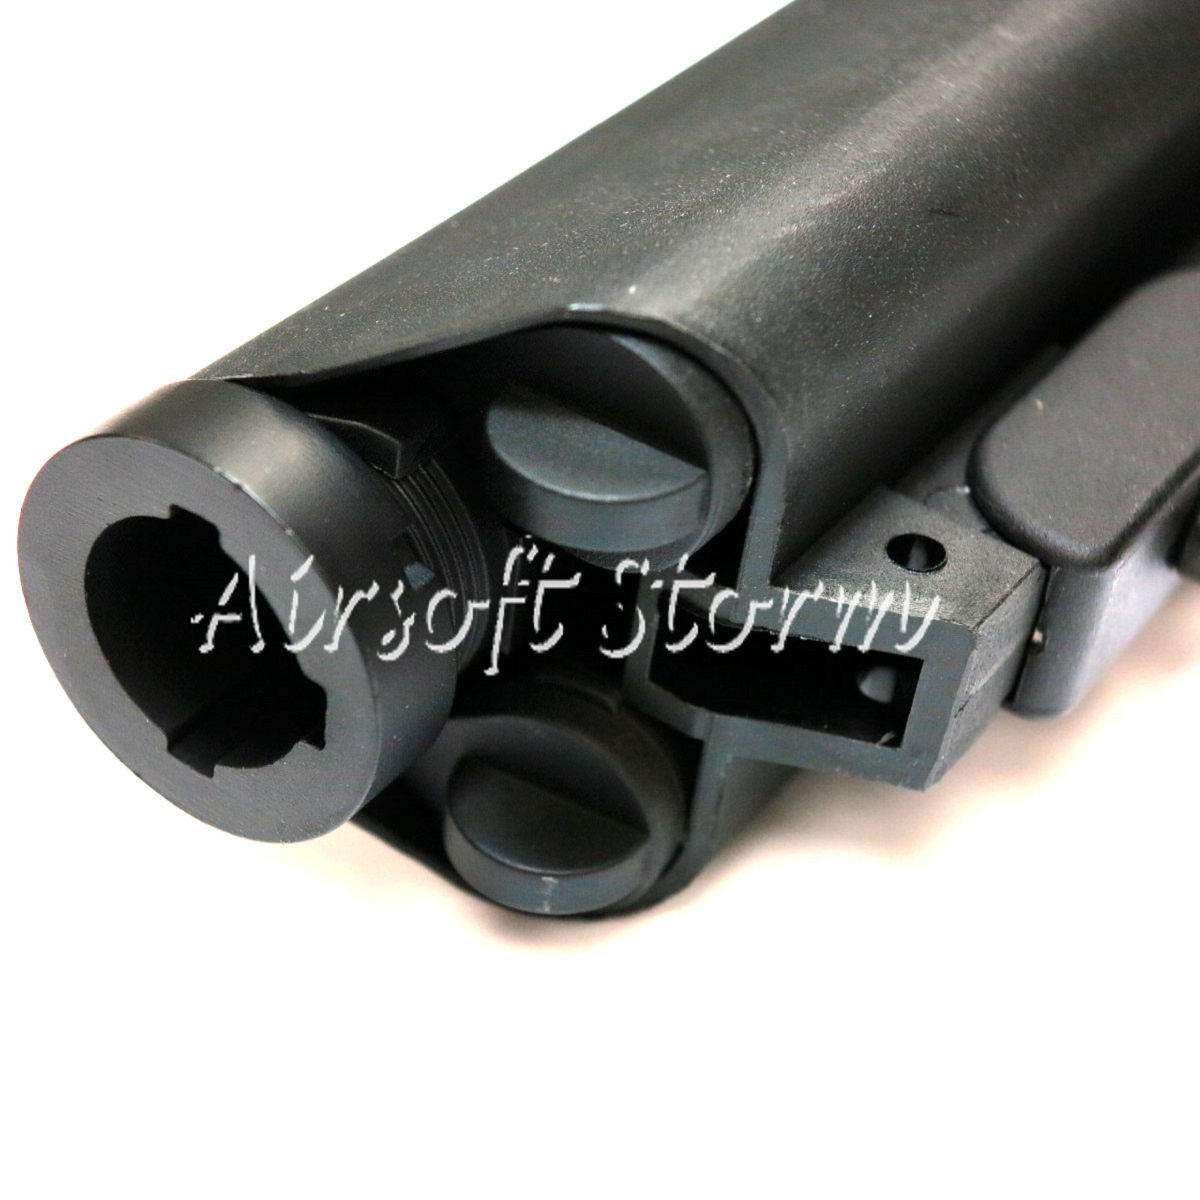 Airsoft Tactical Gear APS ASR Crane Stock for M4/M16 AEG Black - Click Image to Close